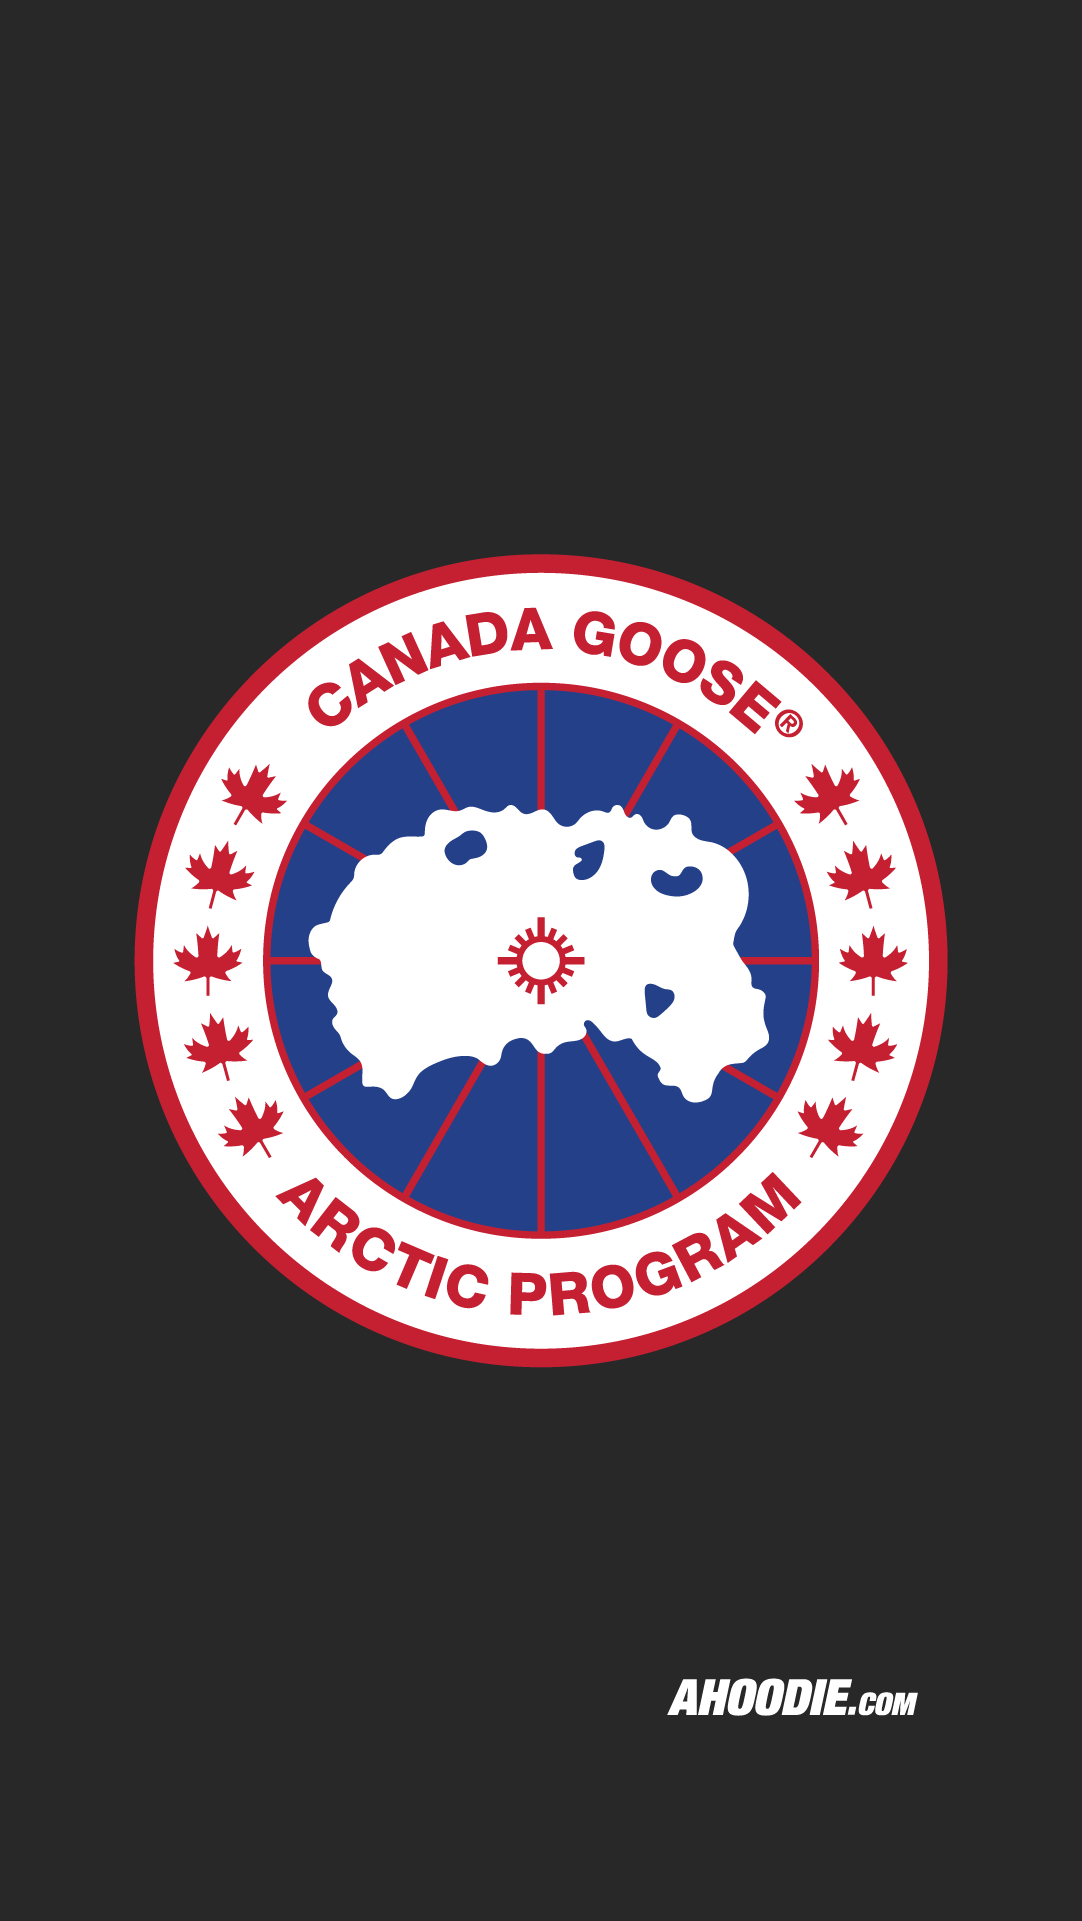 Ahoodie Logo - Ahoodie | Canada Goose logo wallpaper in charcoal